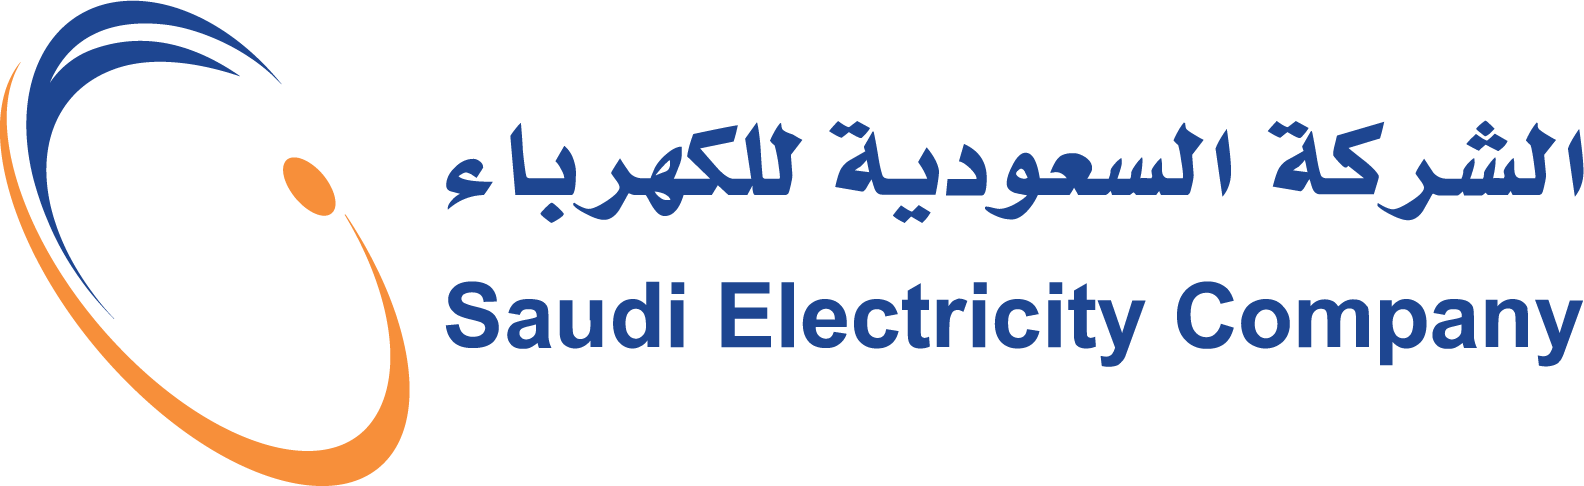 Saudi Electricity Company Logo (SEC) png